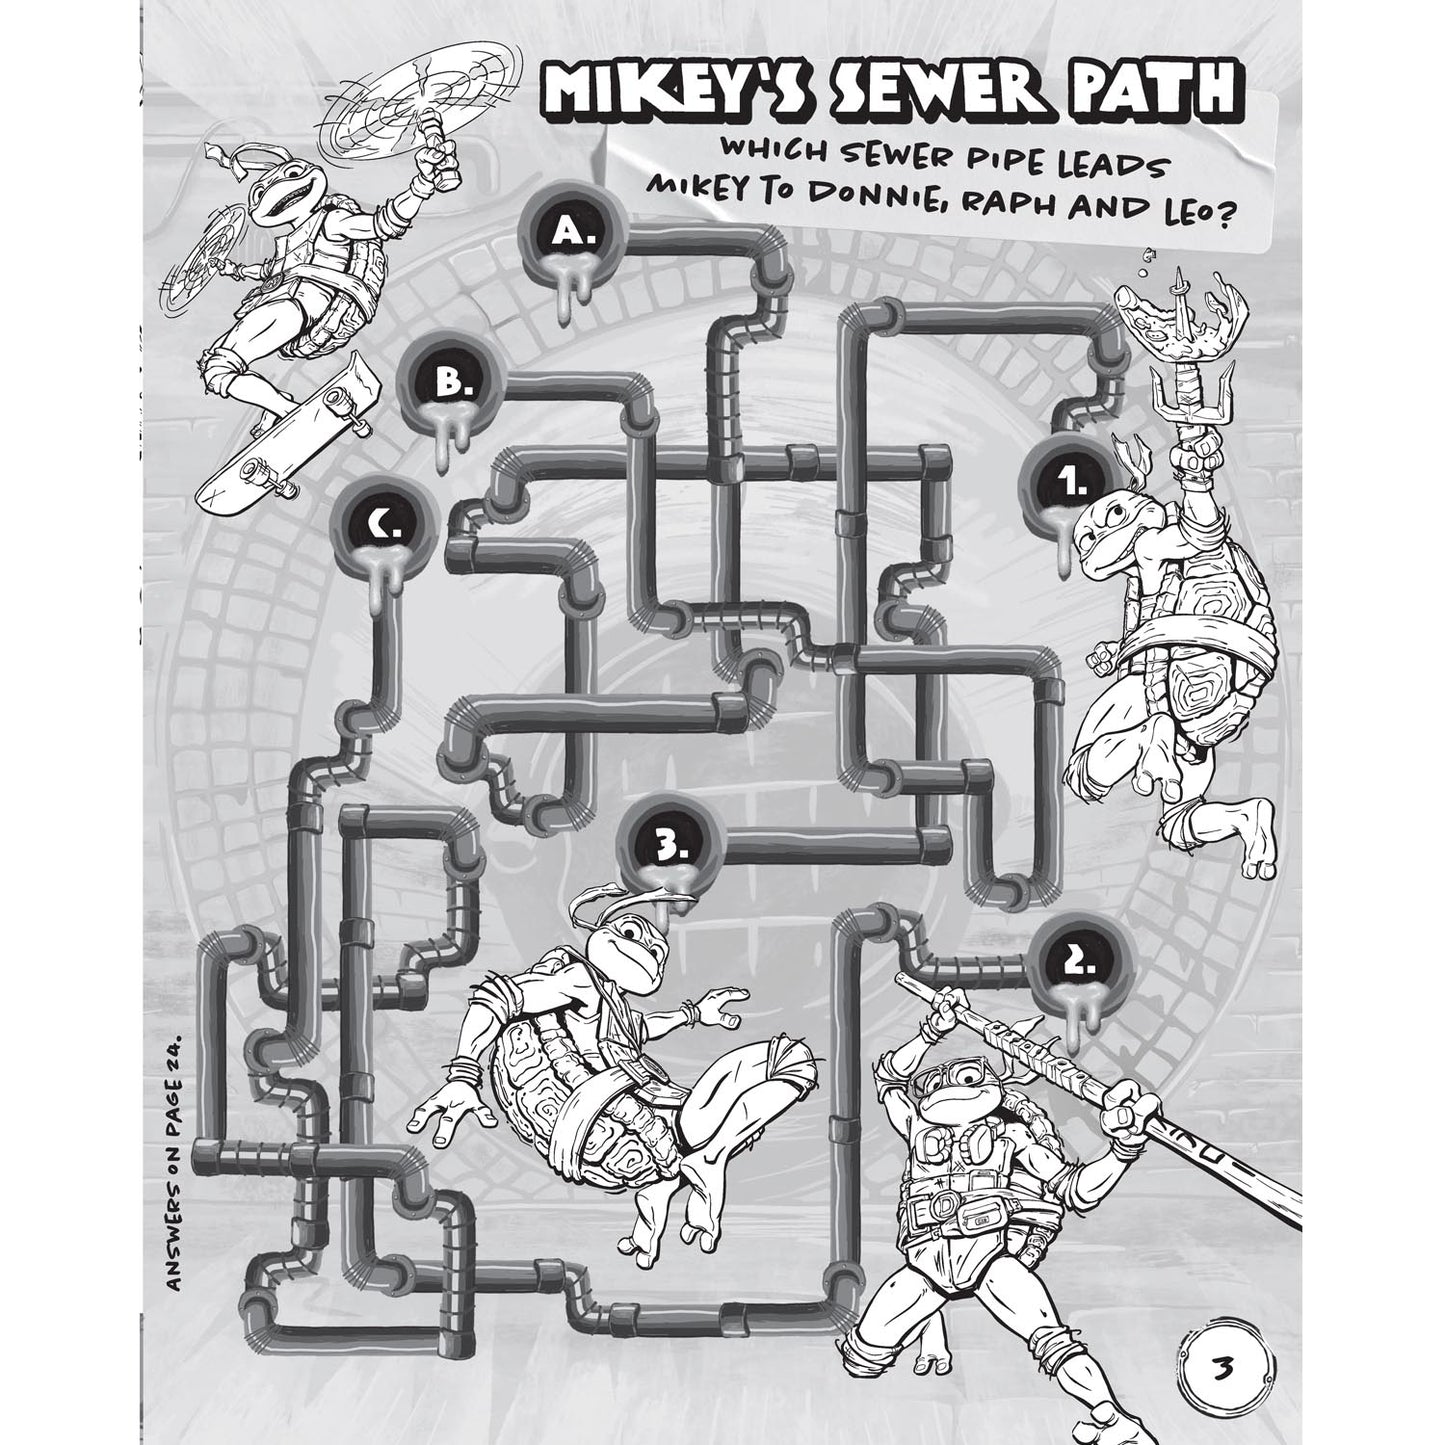 Teenage Mutant Ninja Turtles Mutant Mayhem - Activity Fun Pack | Activity book |Turtles books | TMNT | Activity and Sticker Books [Hardcover] Parragon